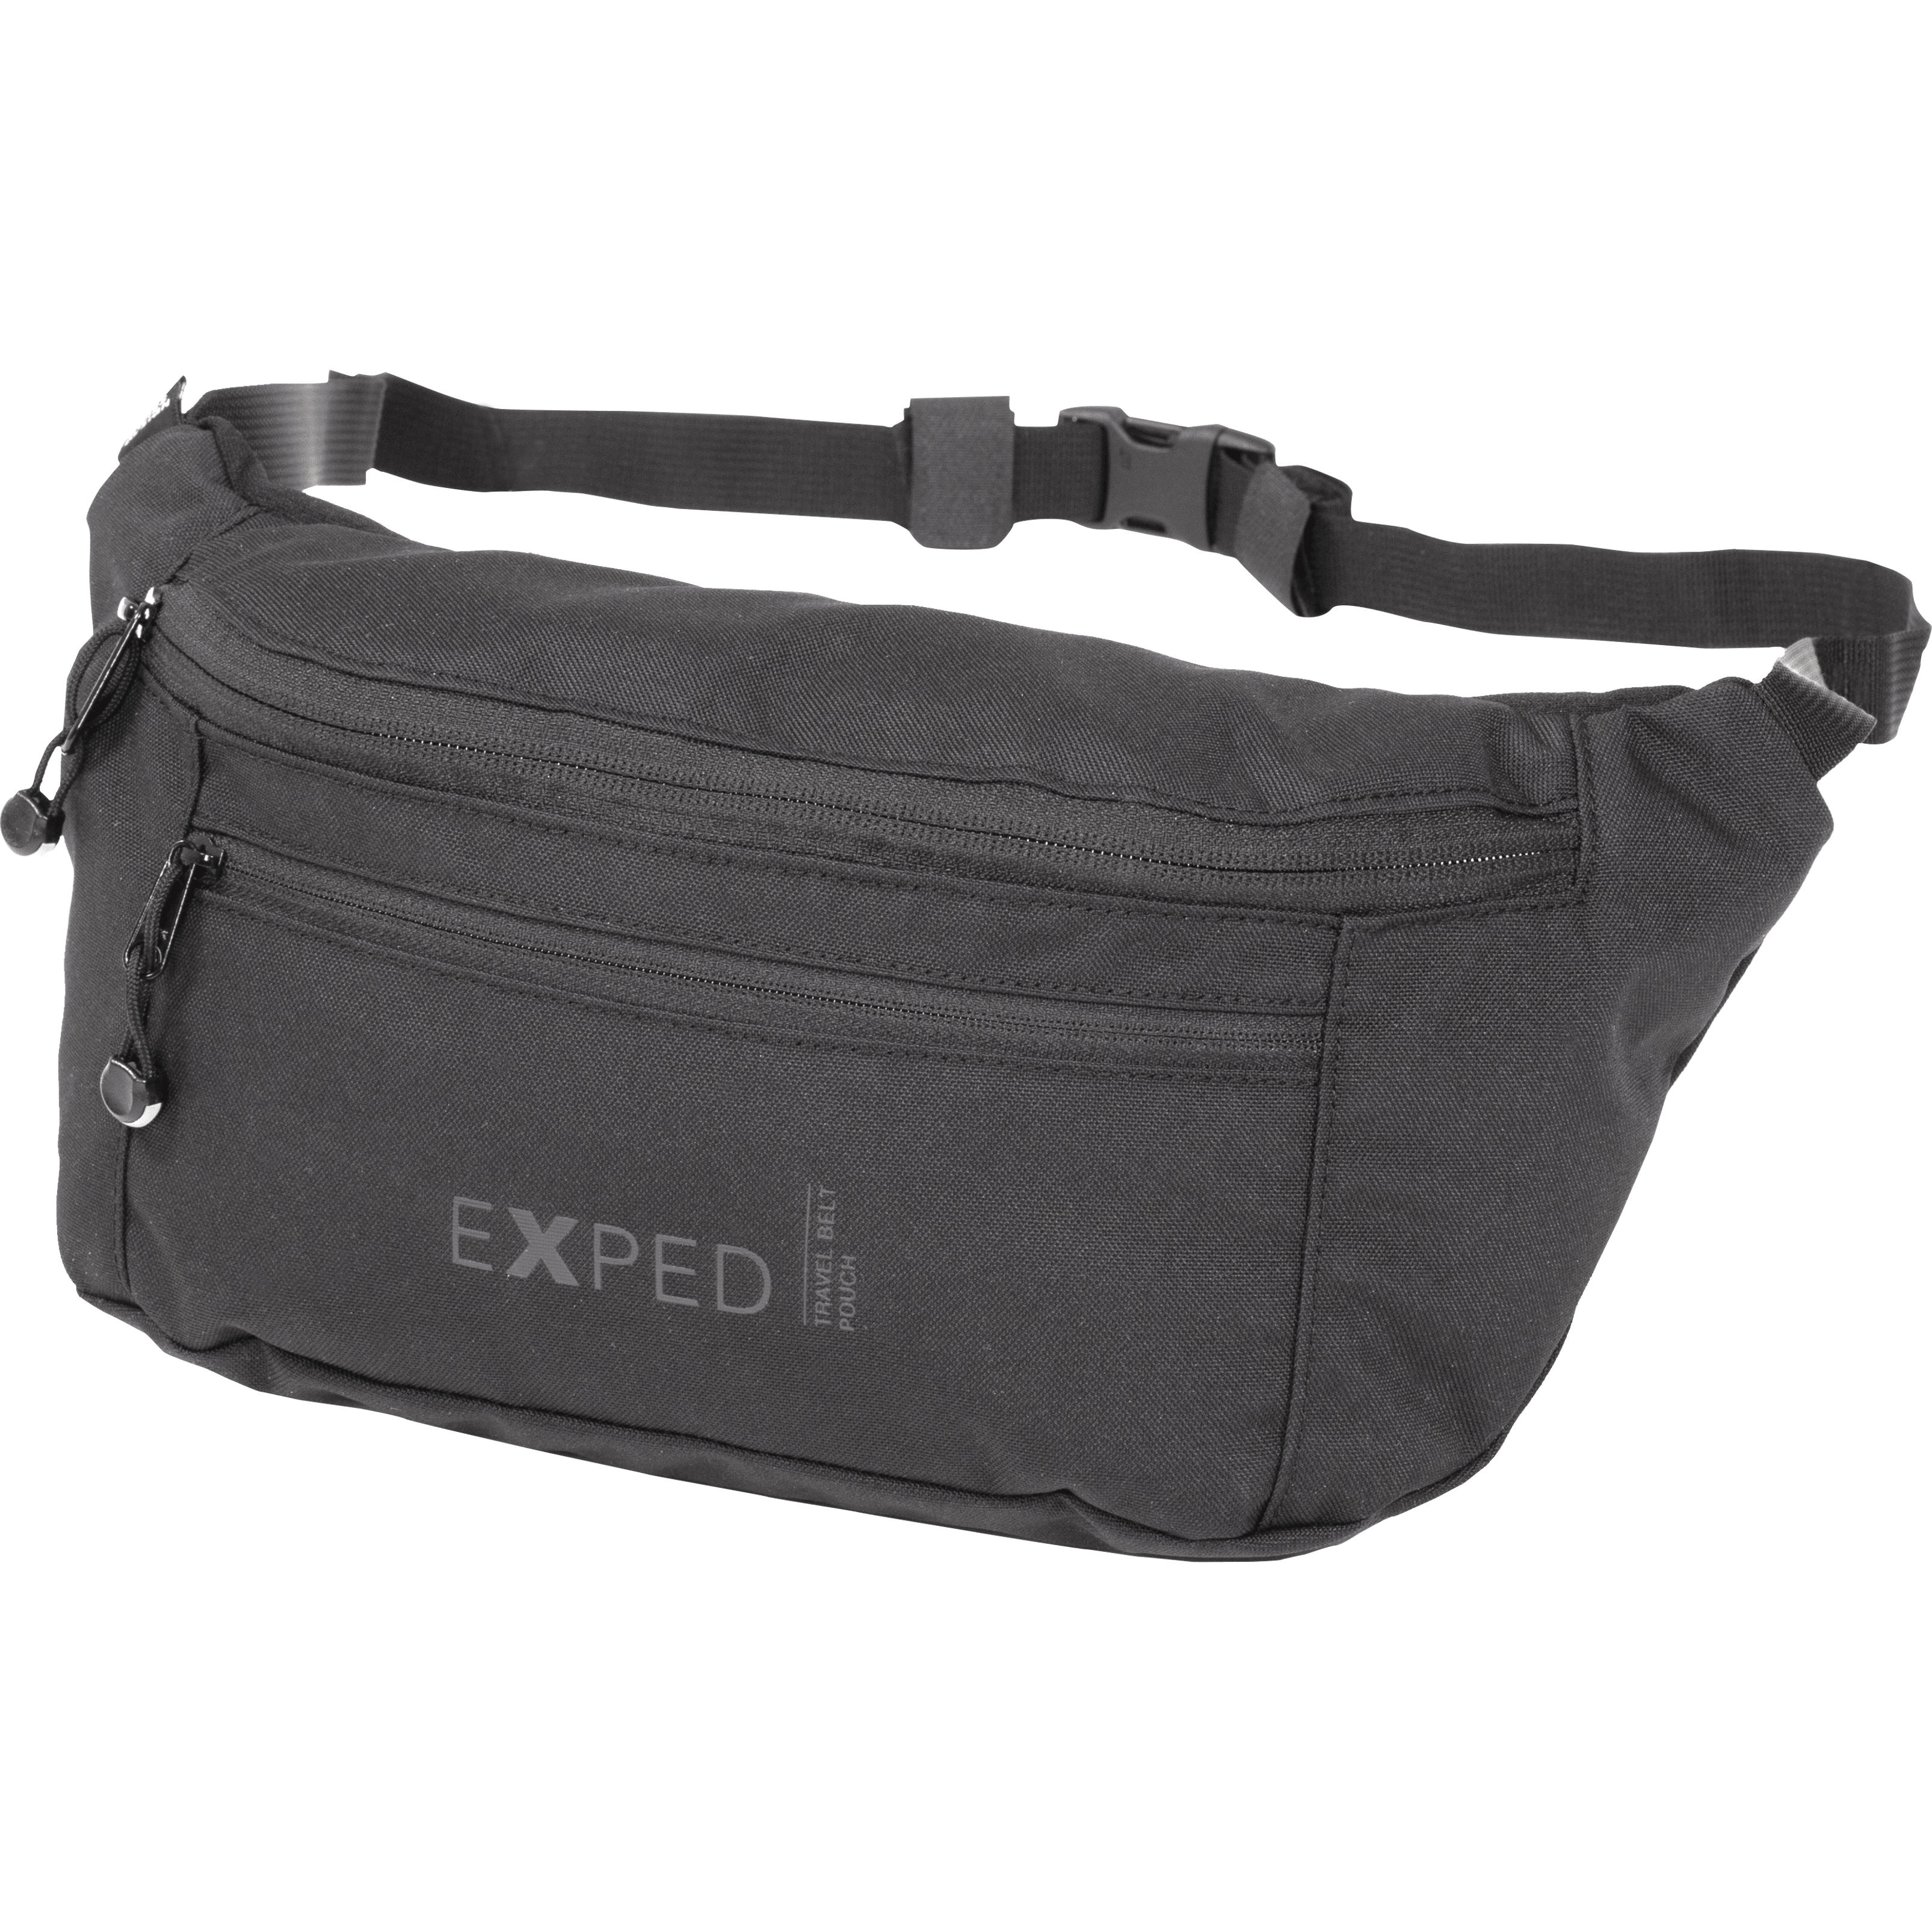 Поясная сумка Exped Travel Belt Pouch black - черный фото 1